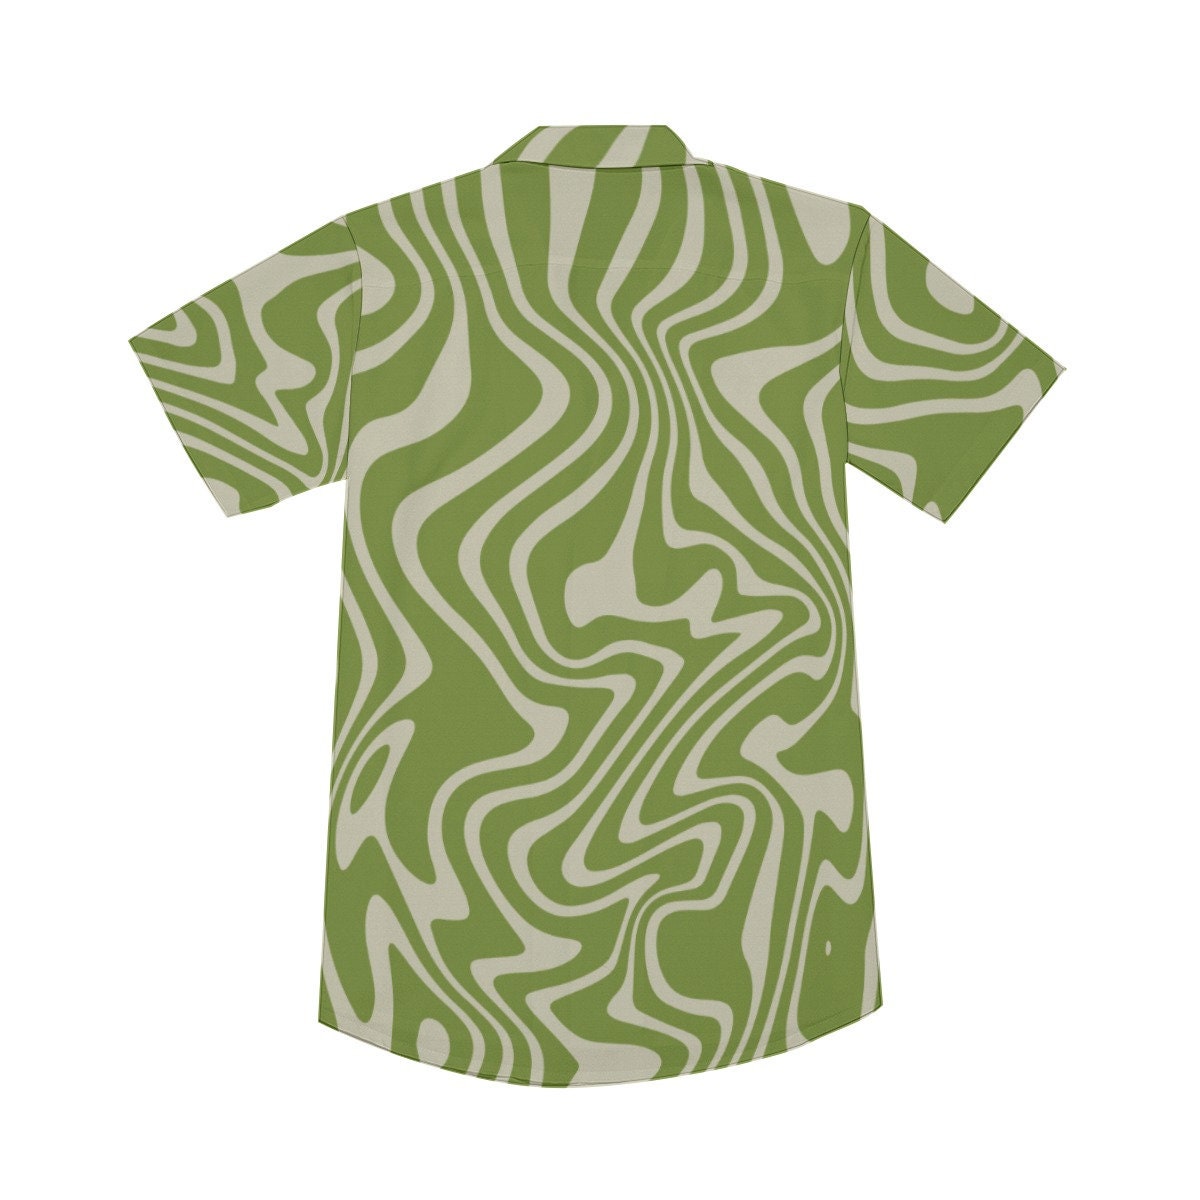 Vintage 70s style shirt, Retro Shirt Men, Green Groovy Shirt Men, Hippie Shirt Men, Men's Green shirt, 70s Shirt Men, 70s inspired shirt